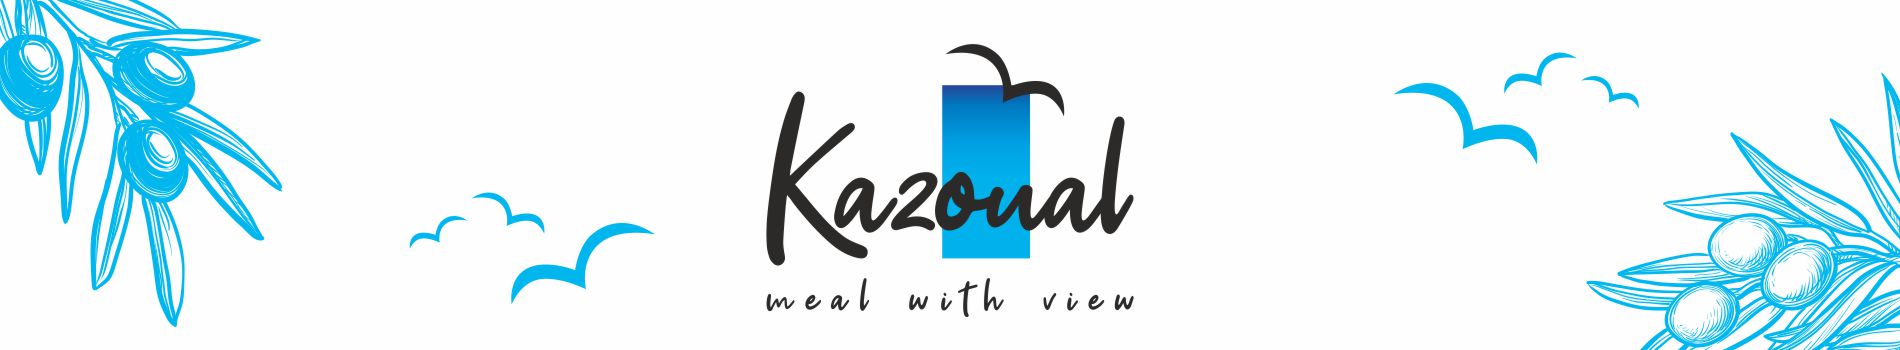 Kazoual header